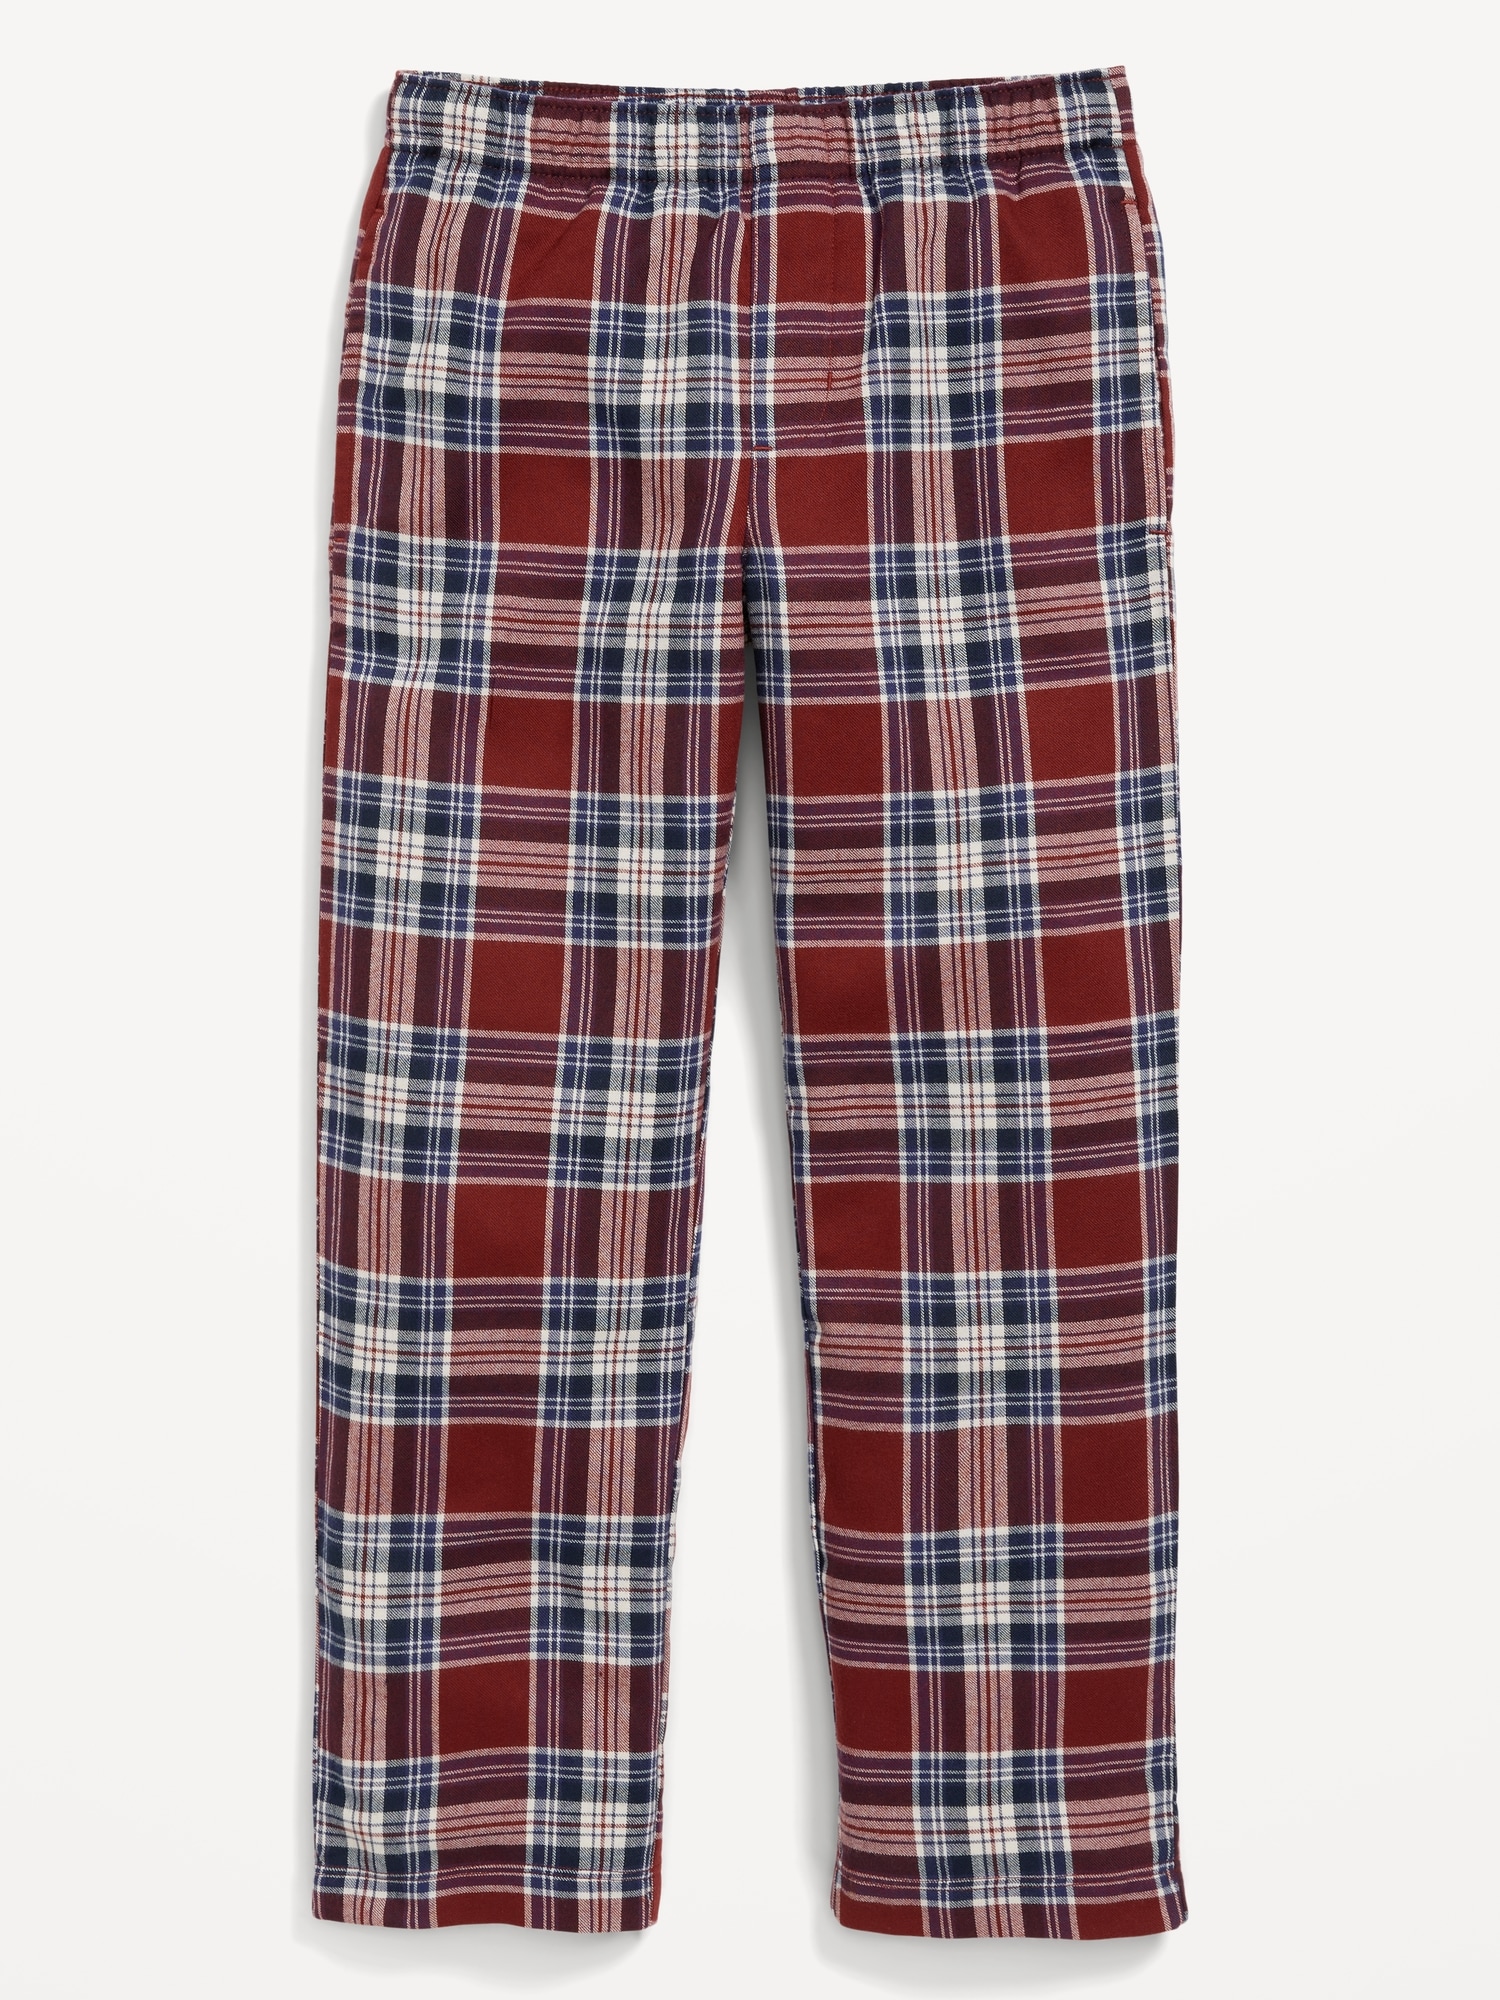 GAP Kids Boys Plaid Flannel Pajama Sleep Pants Bottoms Red White Blue Plaid  4